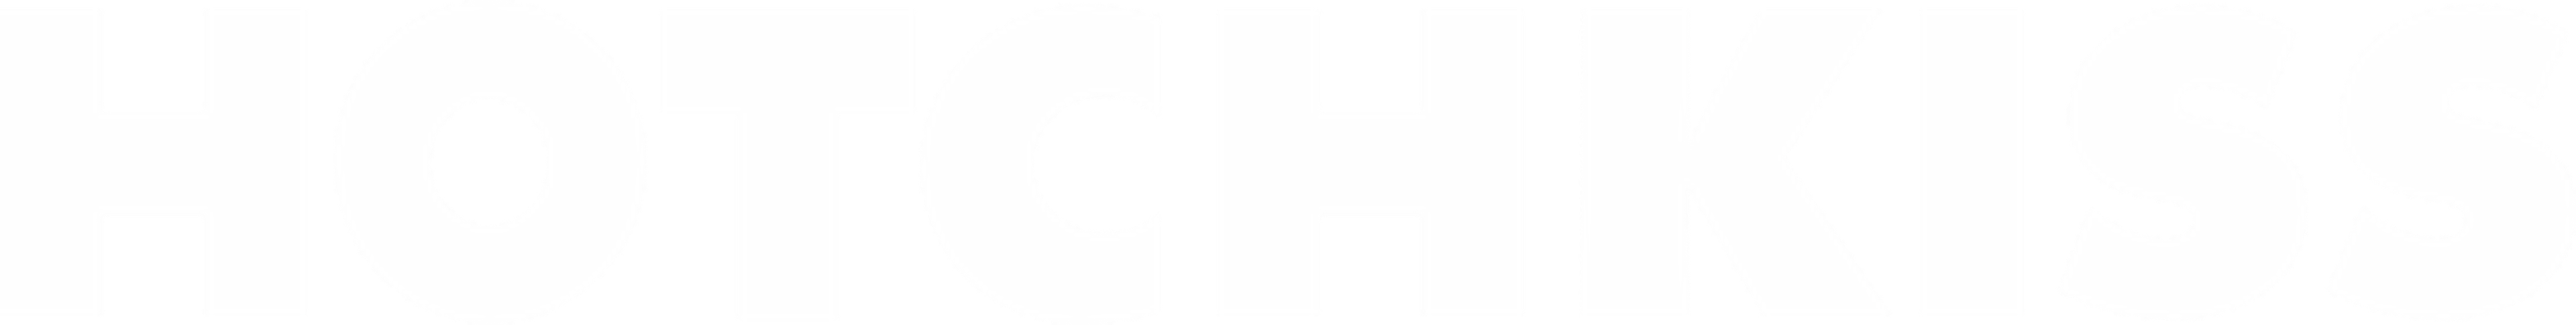 Hotchkiss logo white